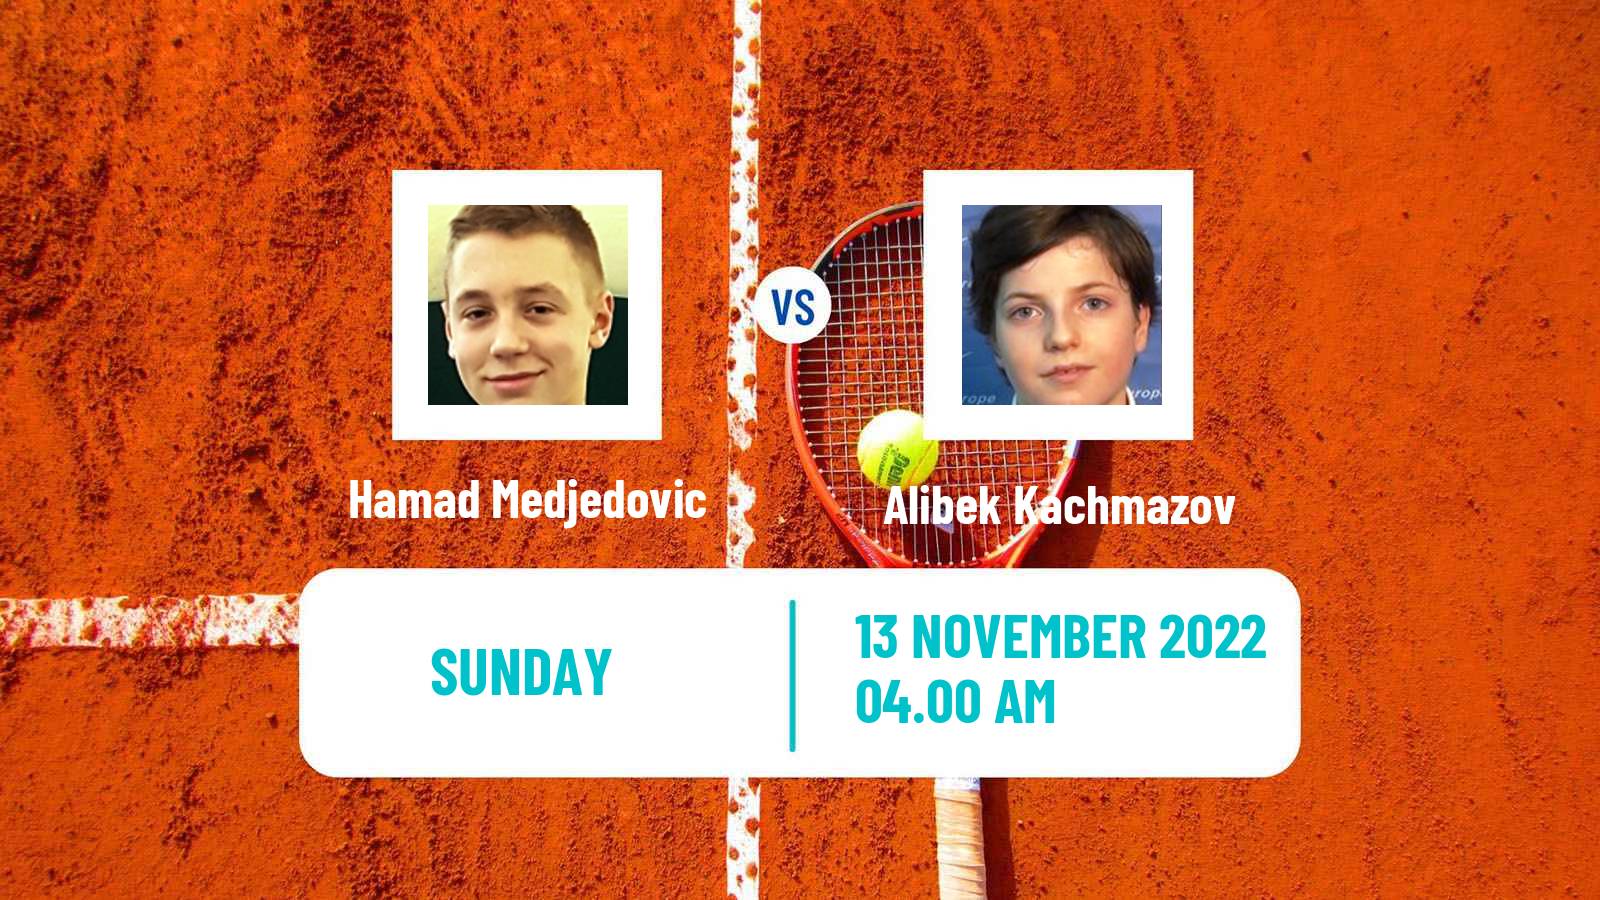 Tennis ATP Challenger Hamad Medjedovic - Alibek Kachmazov